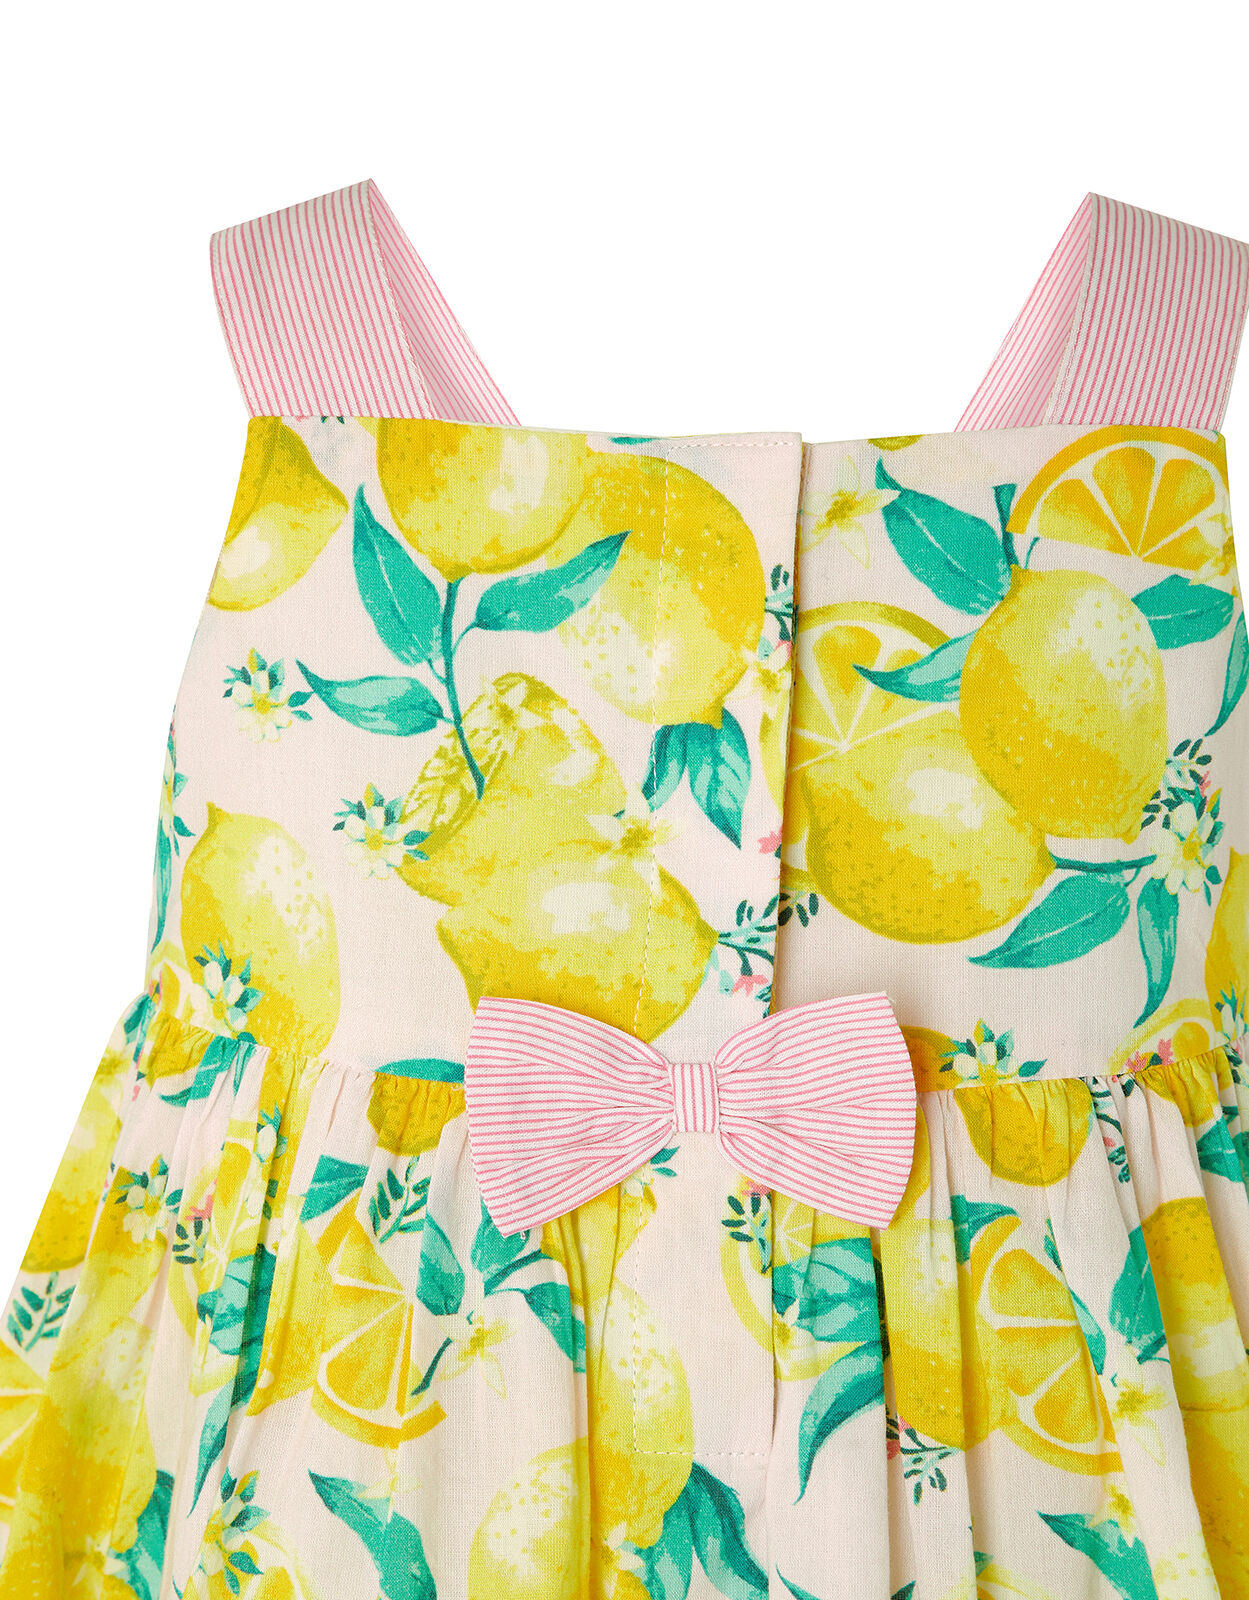 newborn lemon dress